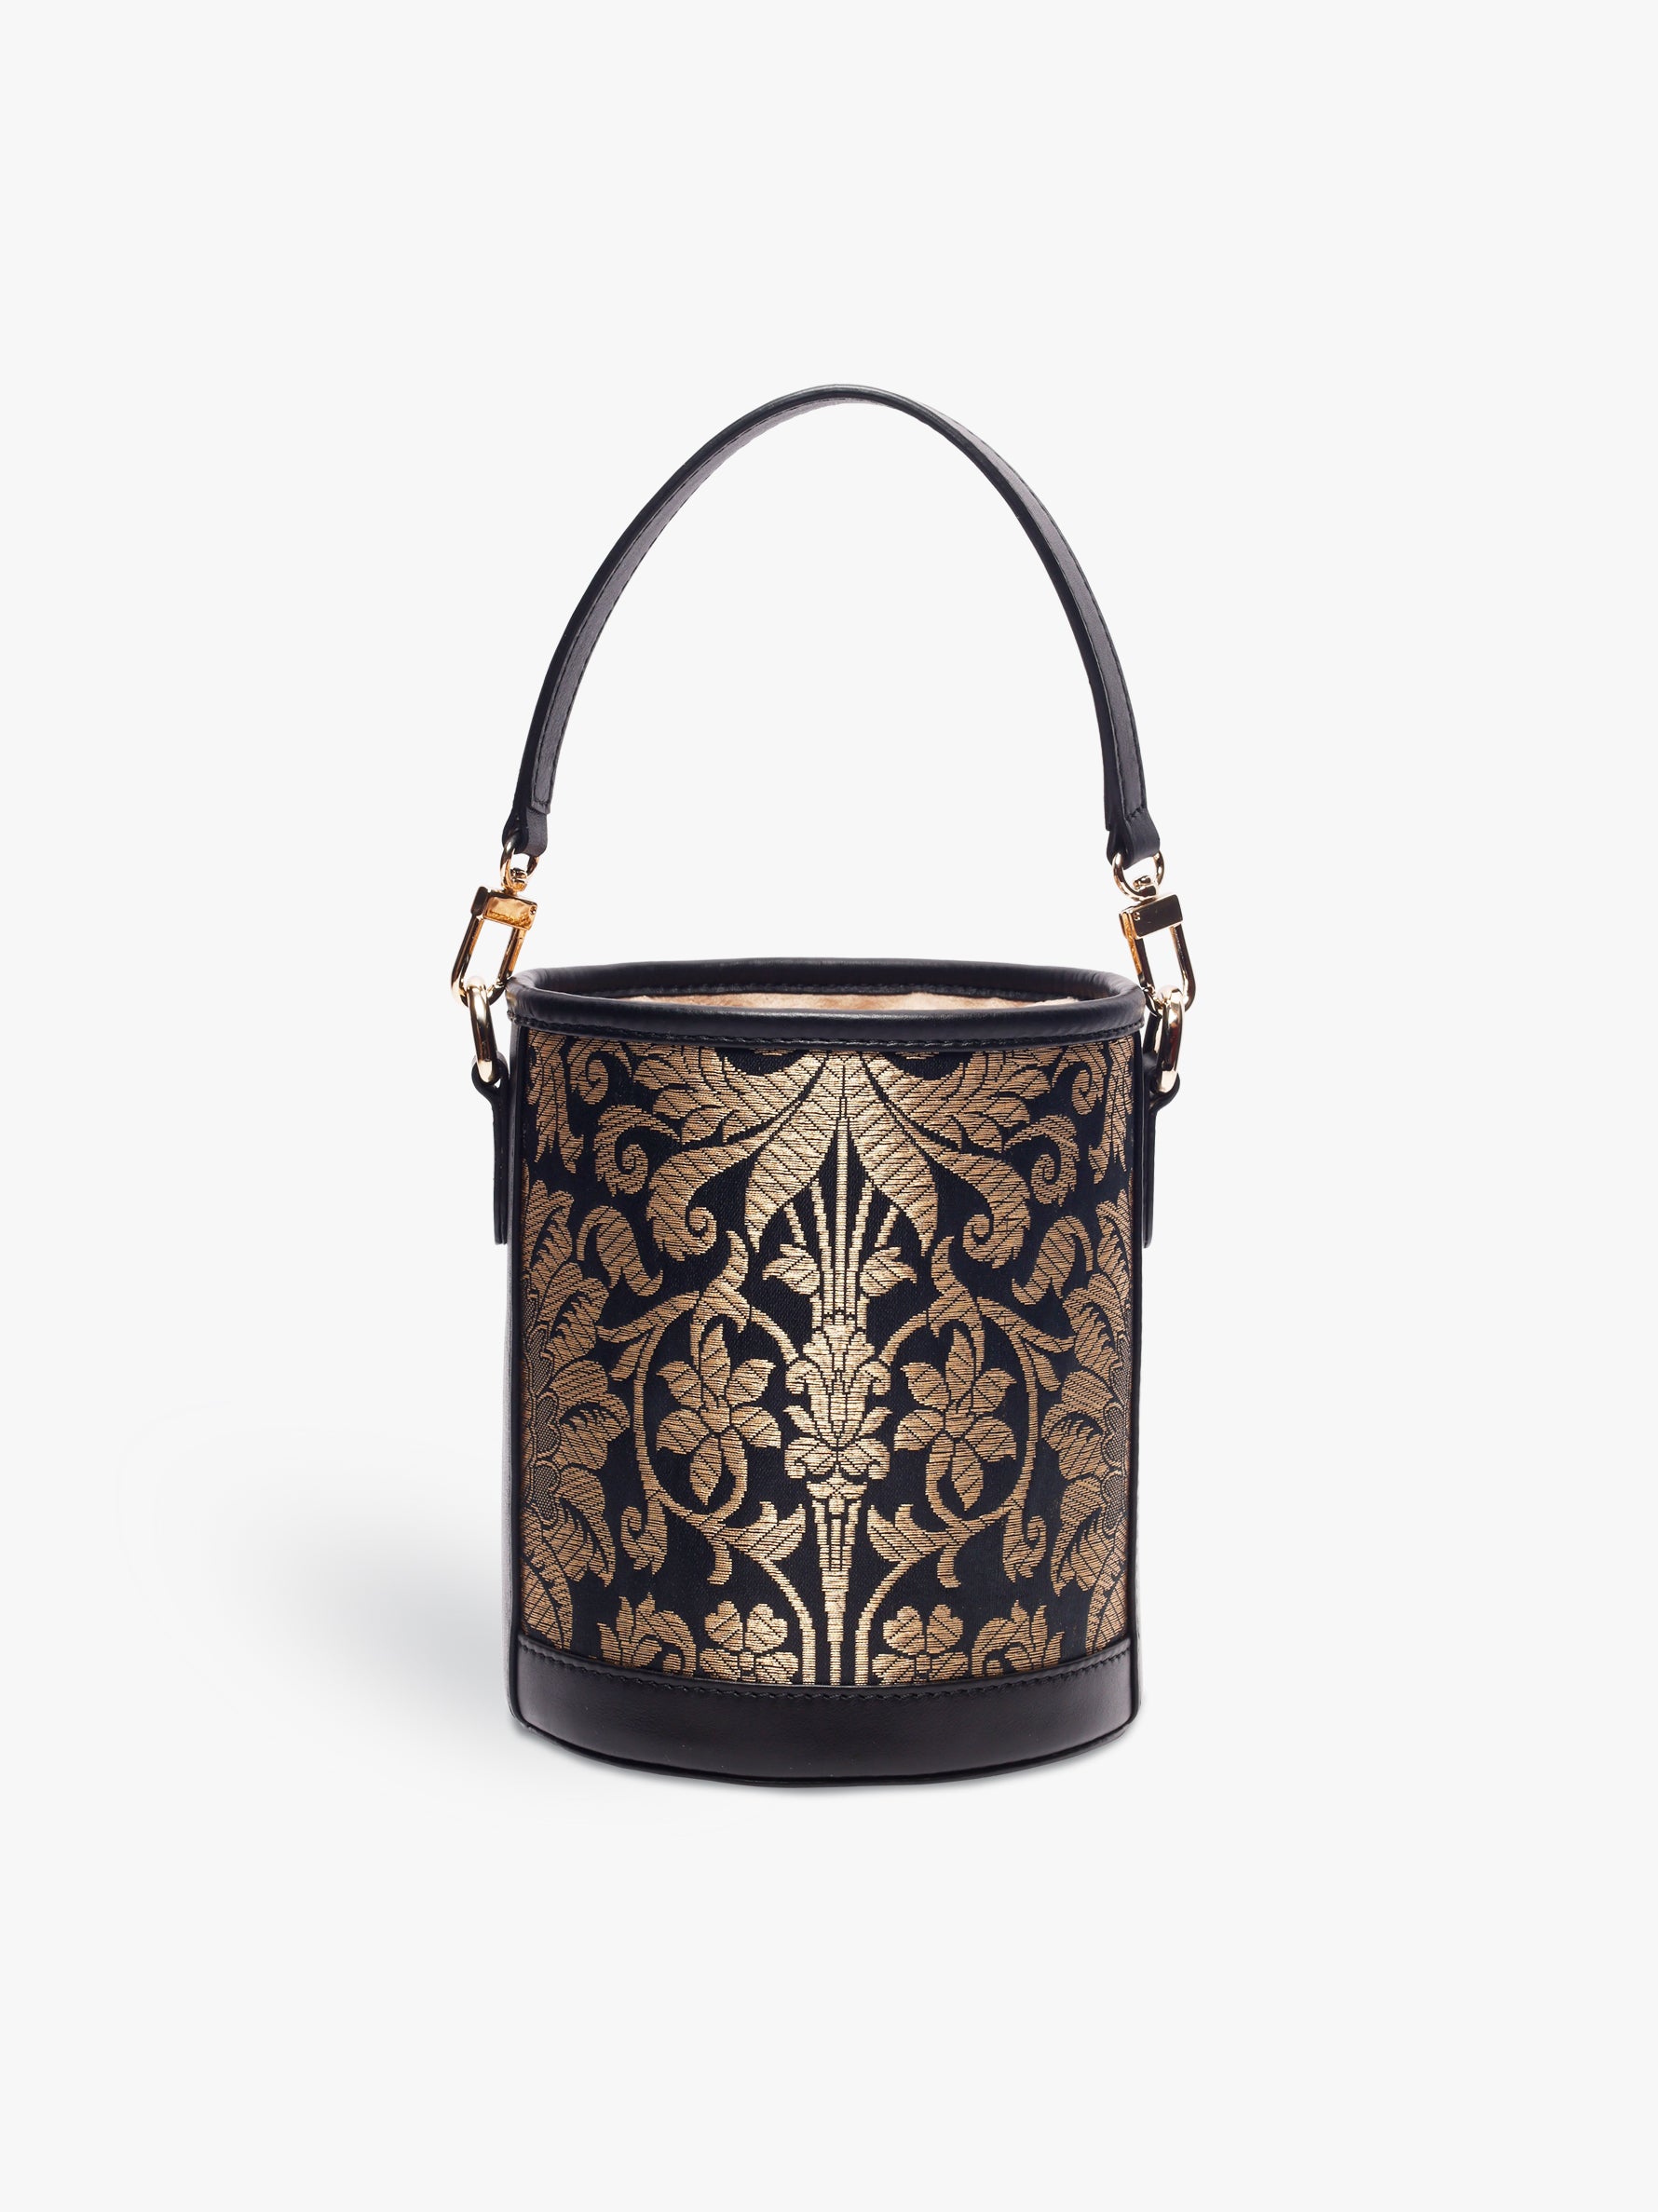 Handcrafted Black Genuine Leather & Banarasi Brocade Cylinder Potli Bag for Women Tan & Loom 